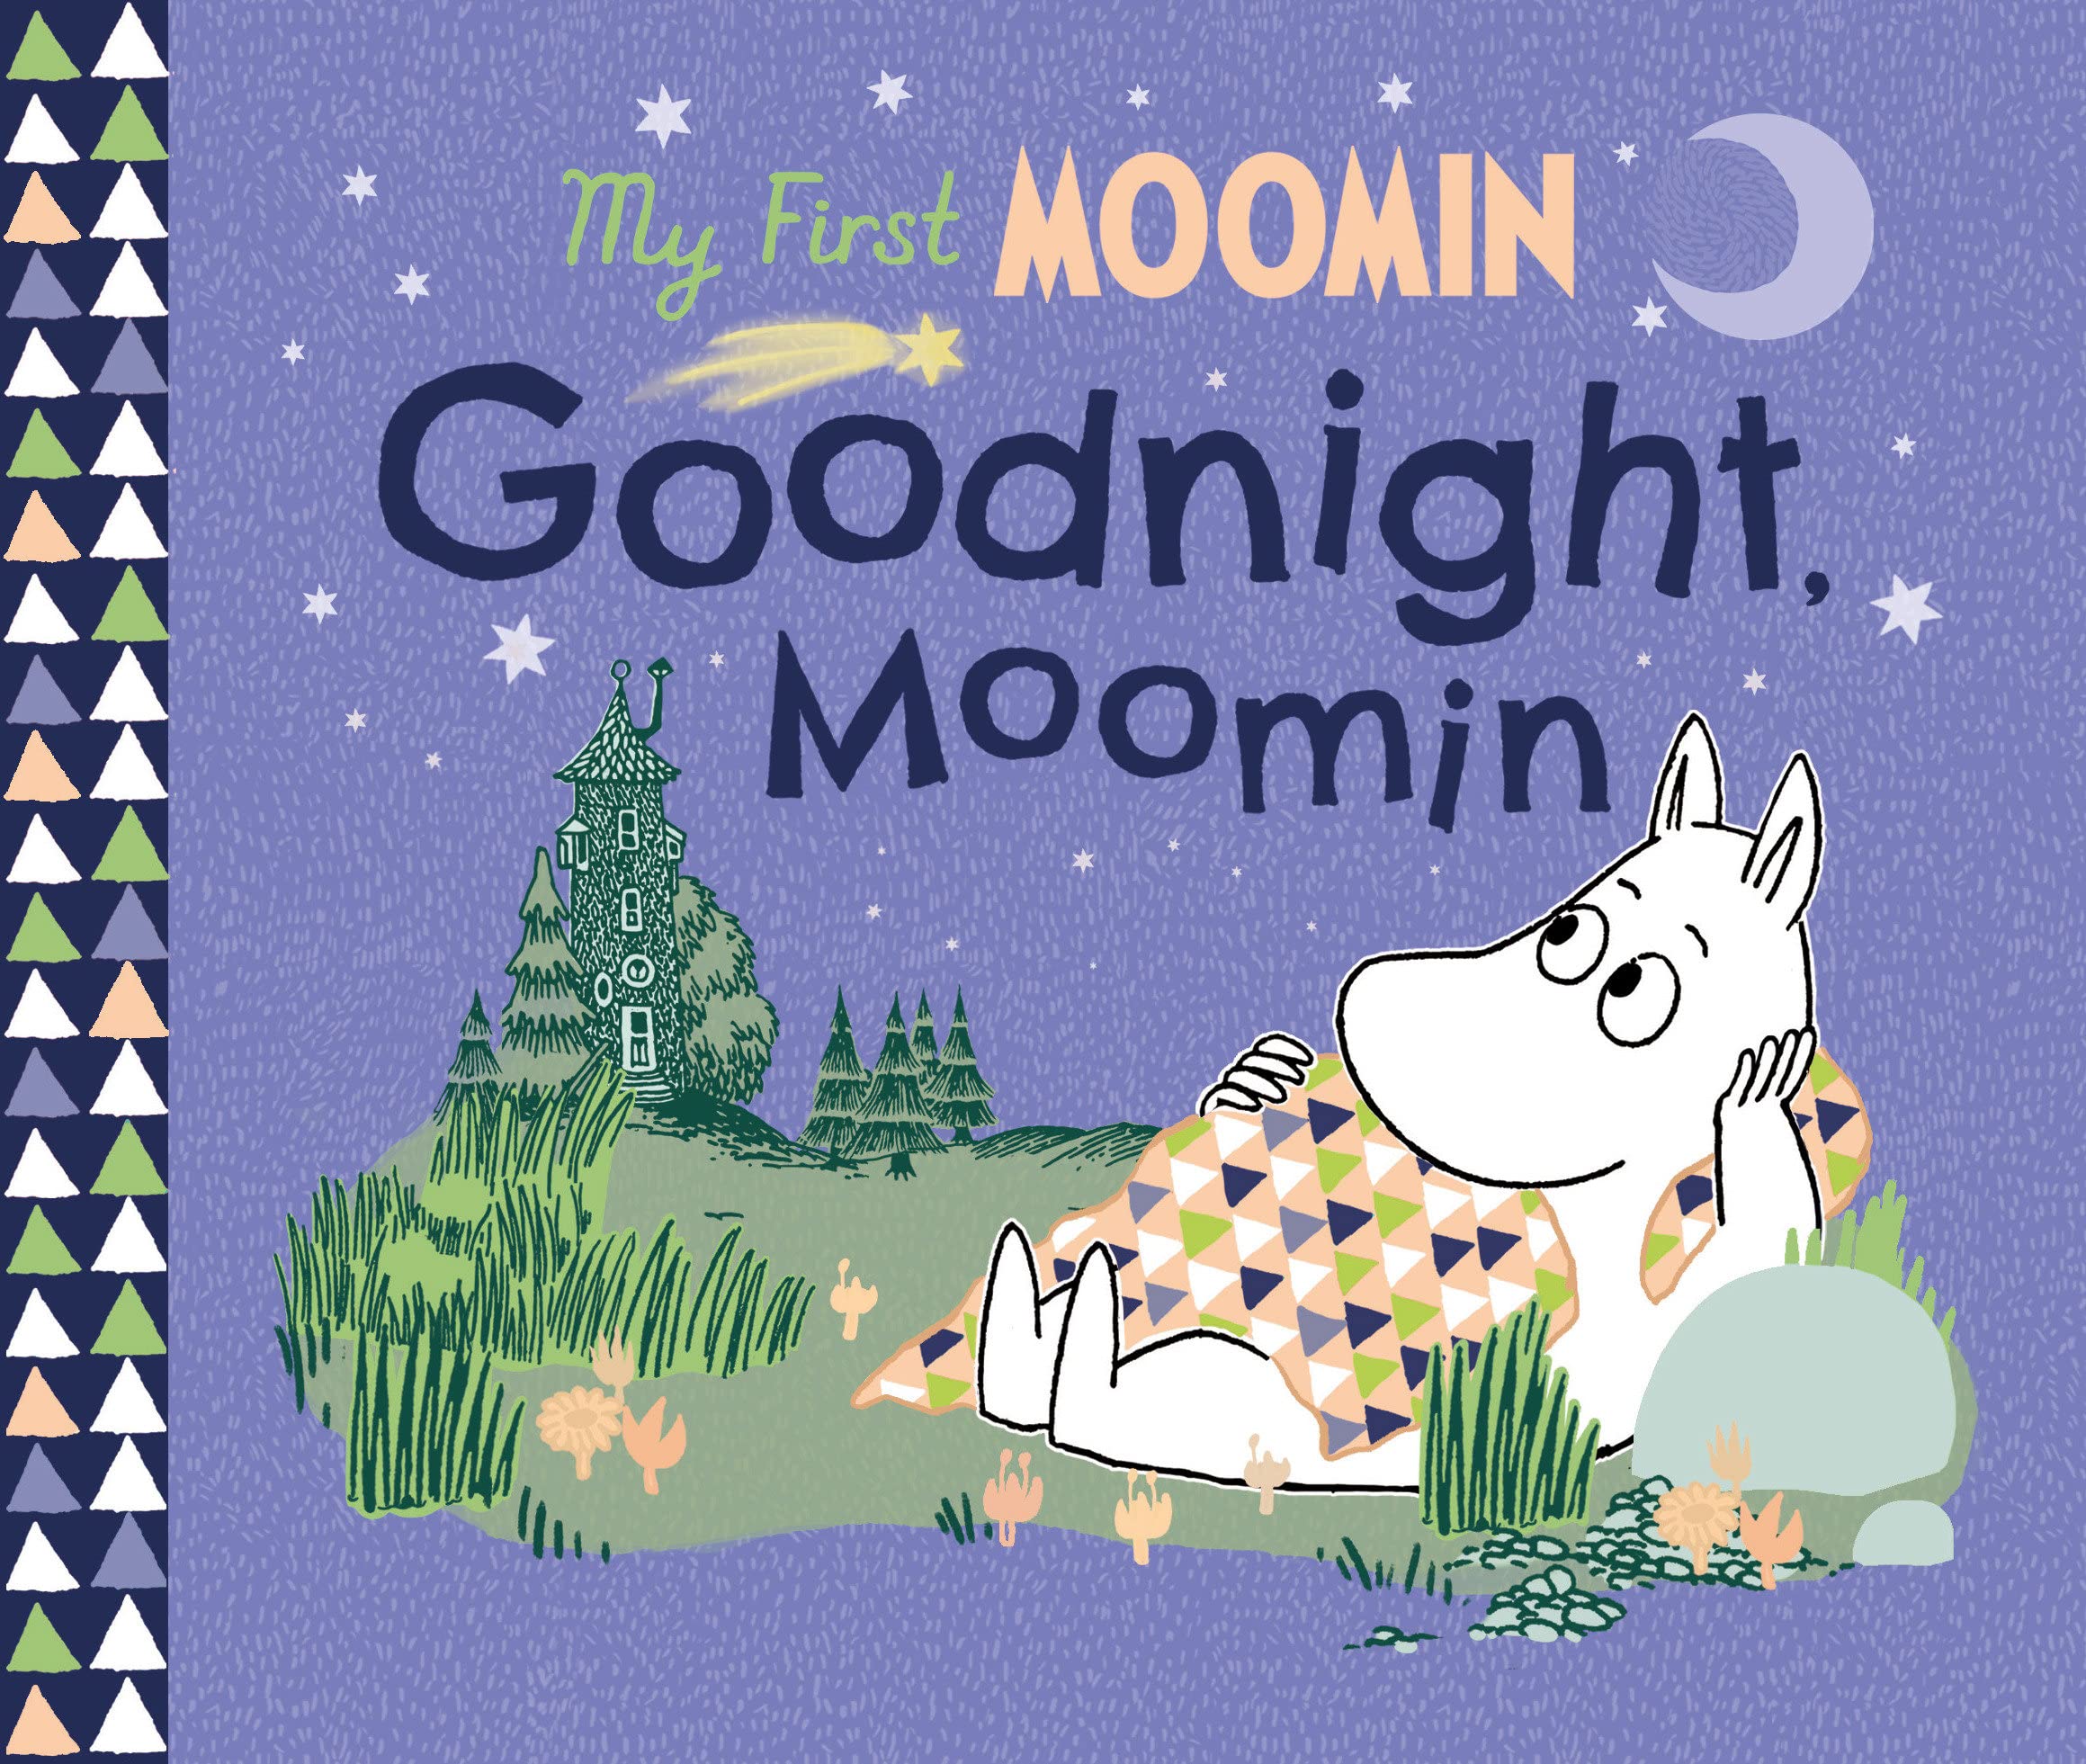 My First Moomin: Goodnight Moomin Board book – Import, 20 October 2022